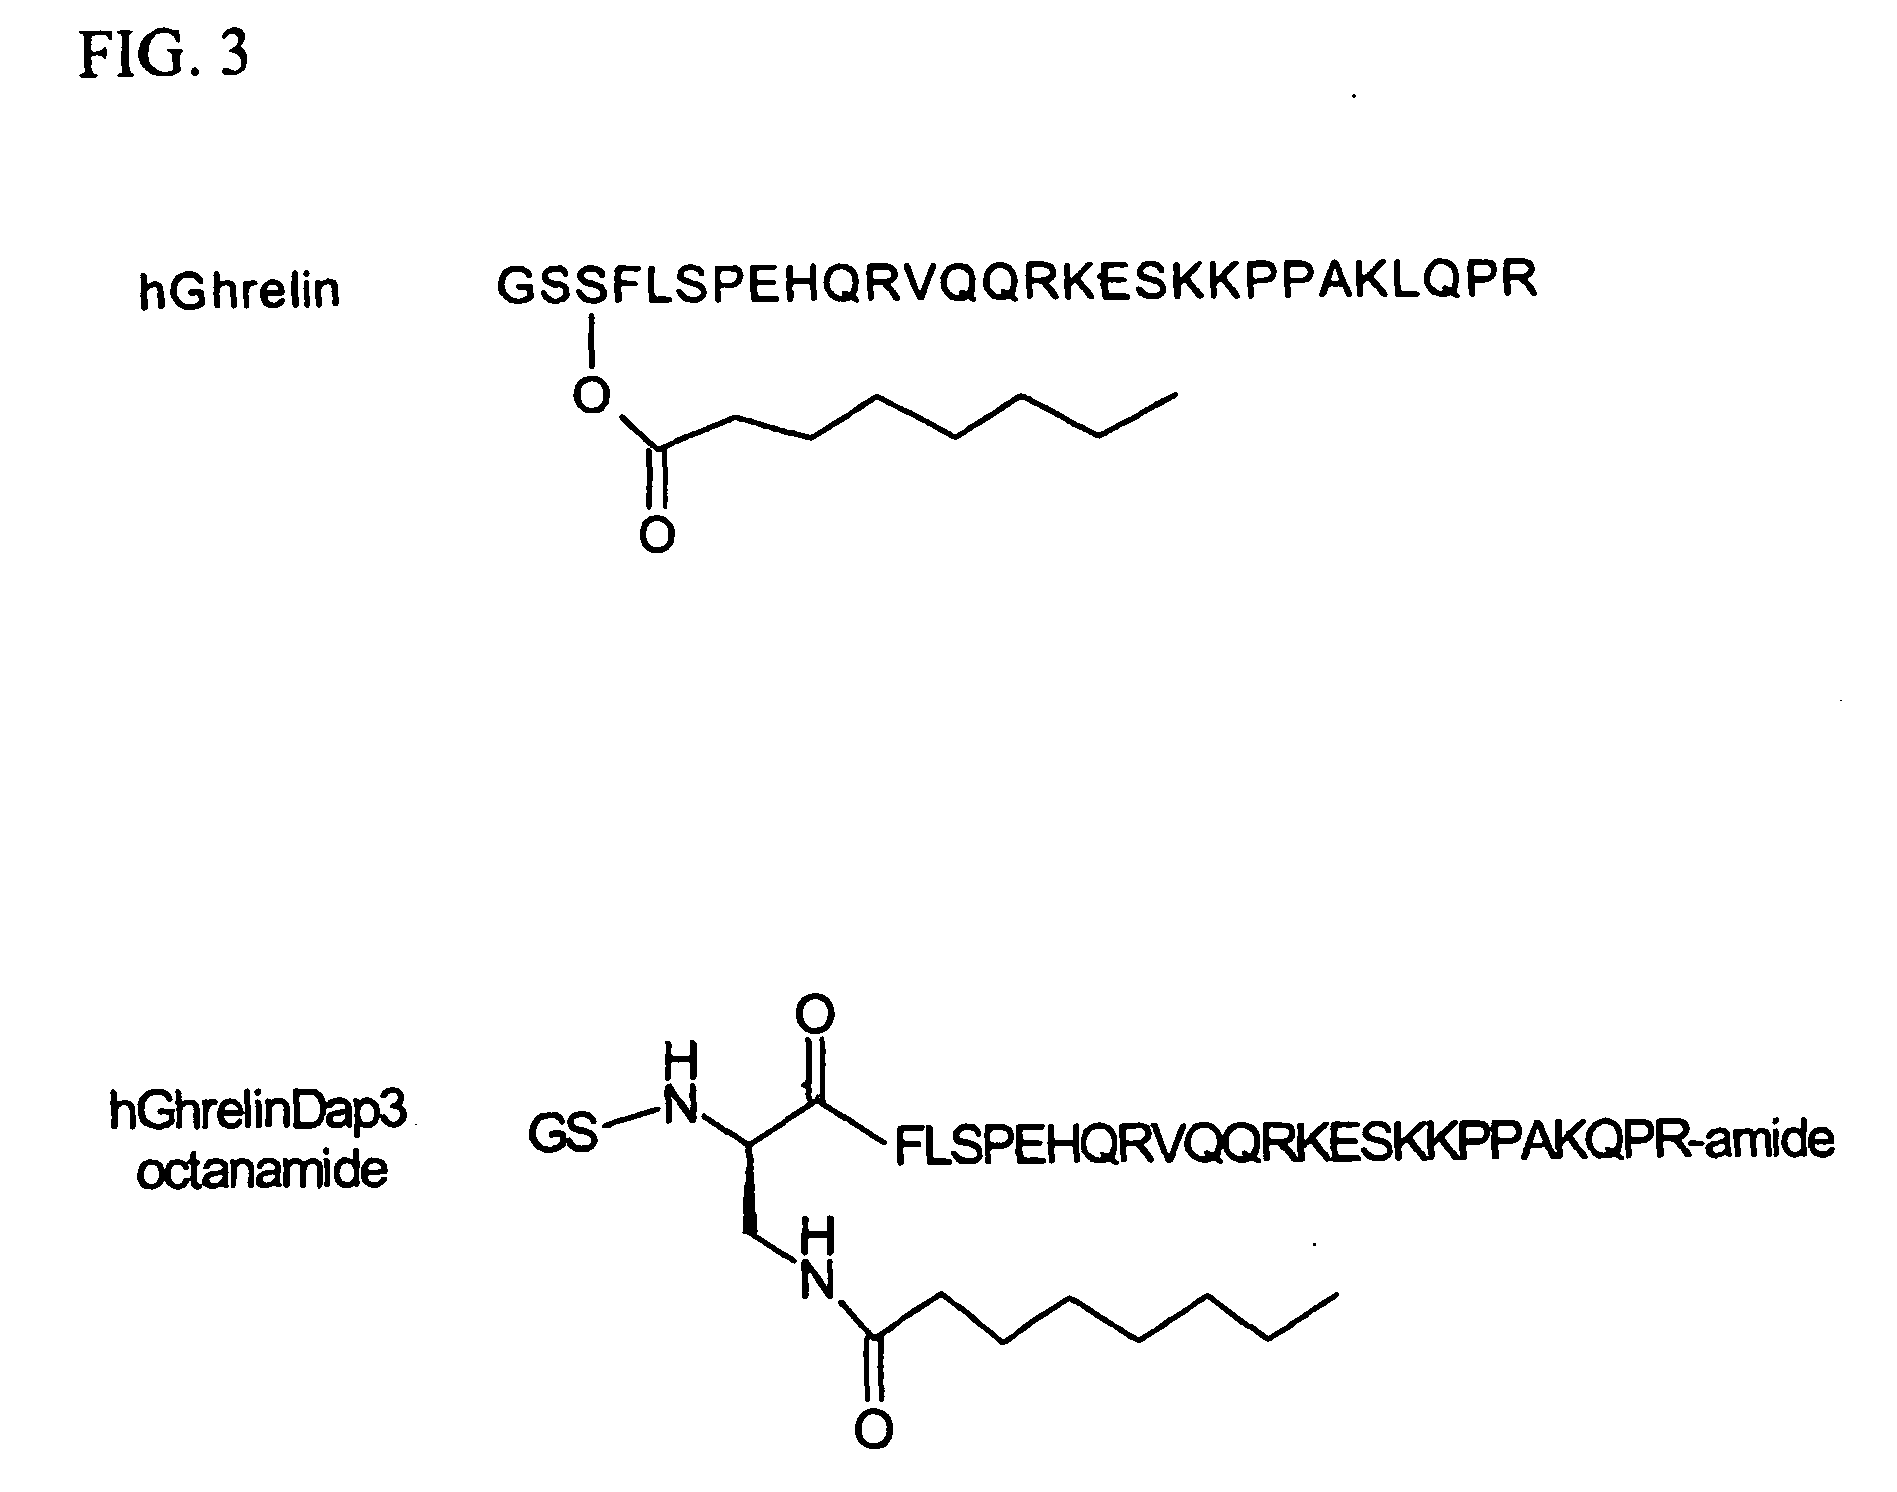 Anti-ghrelin fab antibodies